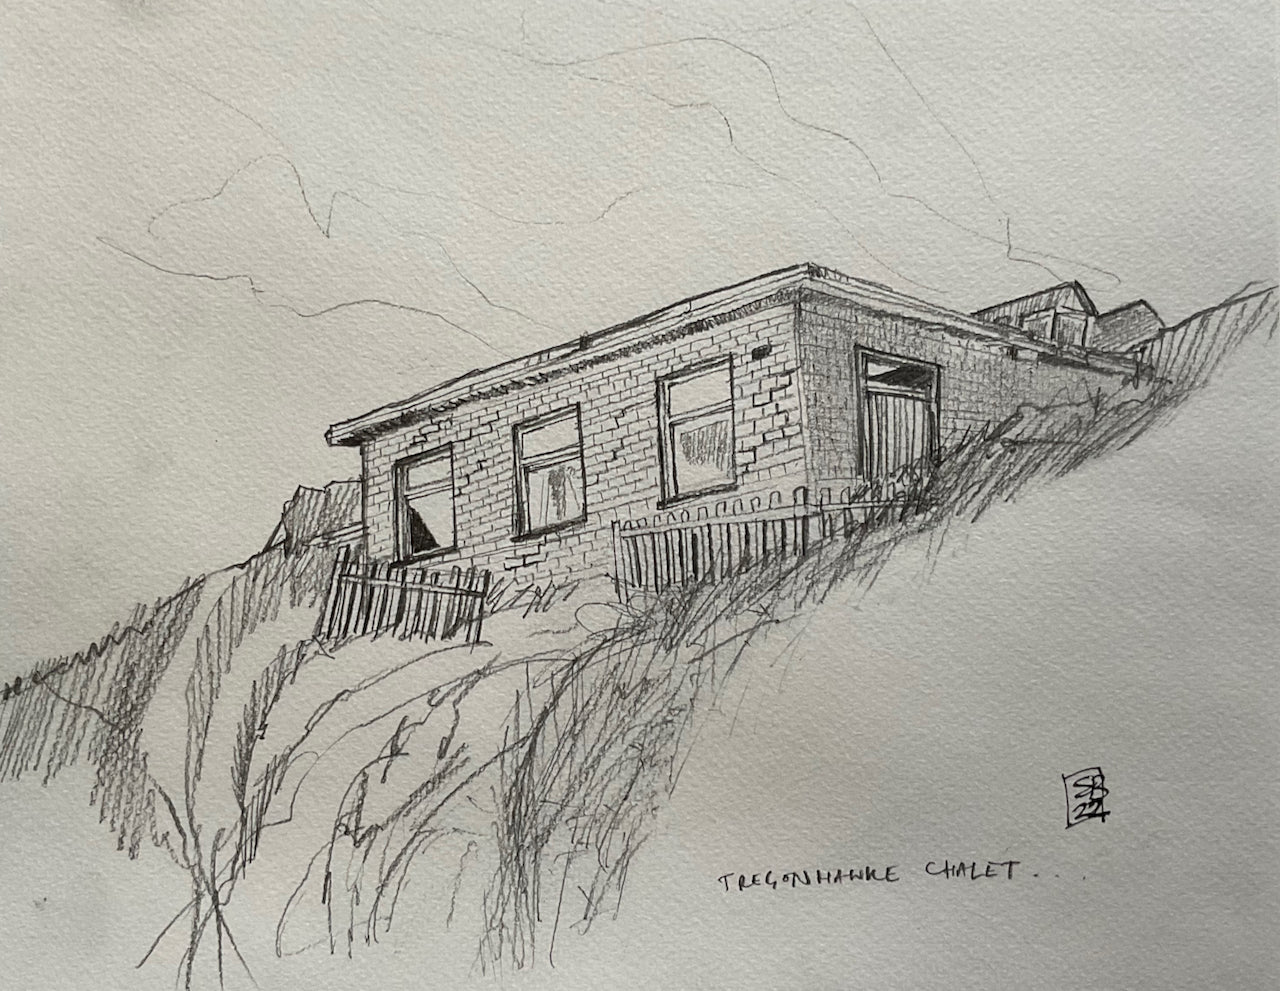 Artist Steven Buckler, chalet nestled into the hillside, pencil drawing 